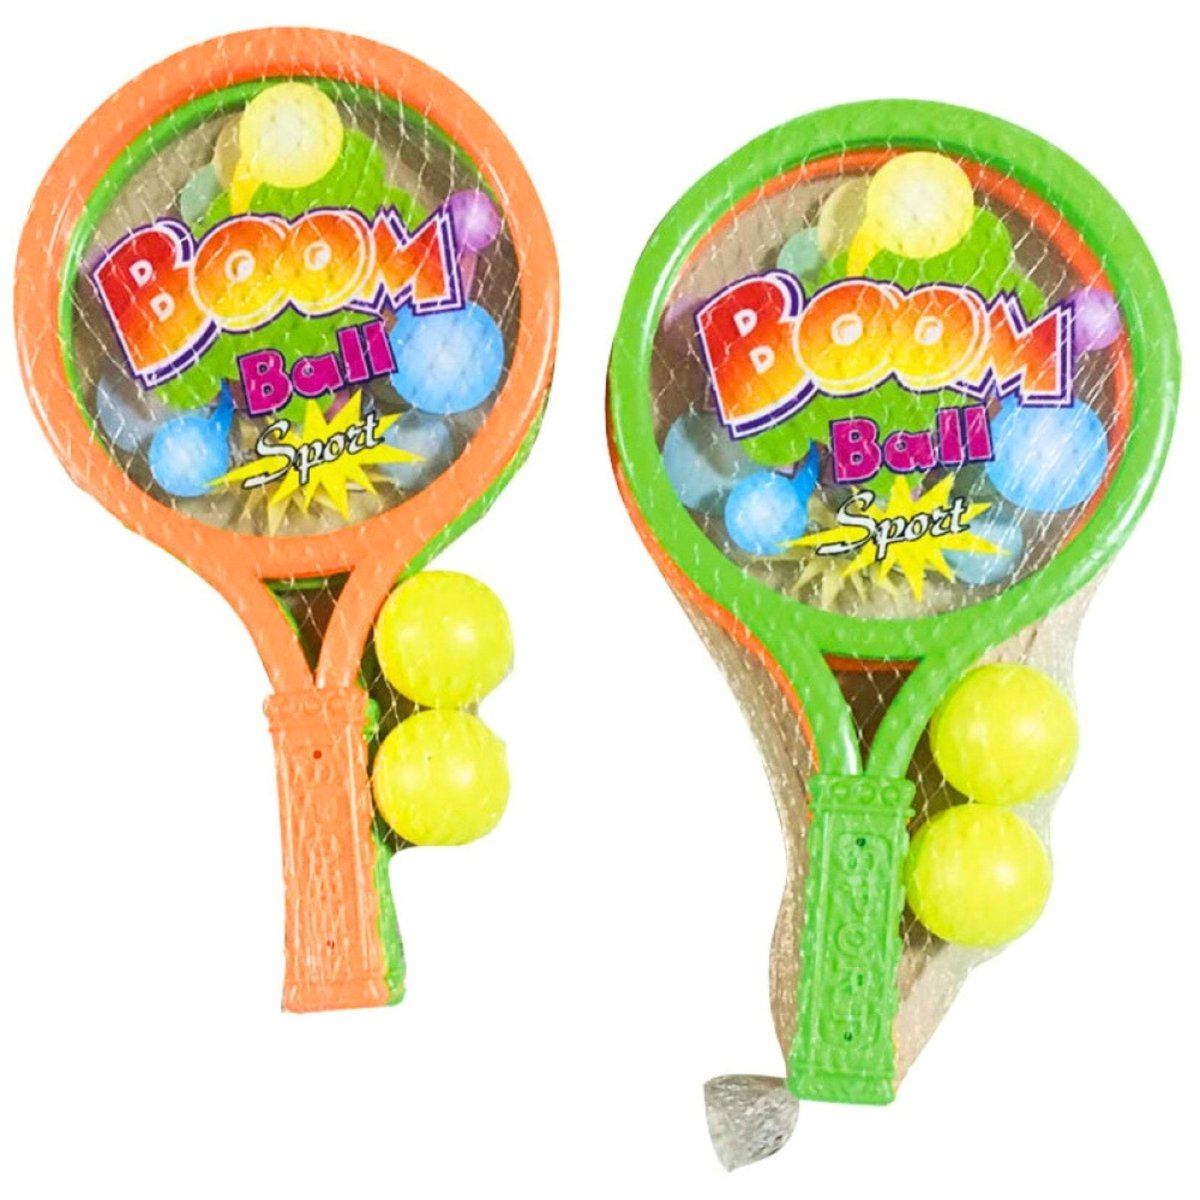 Boom Ball Tennis Set - Kids Party Craft